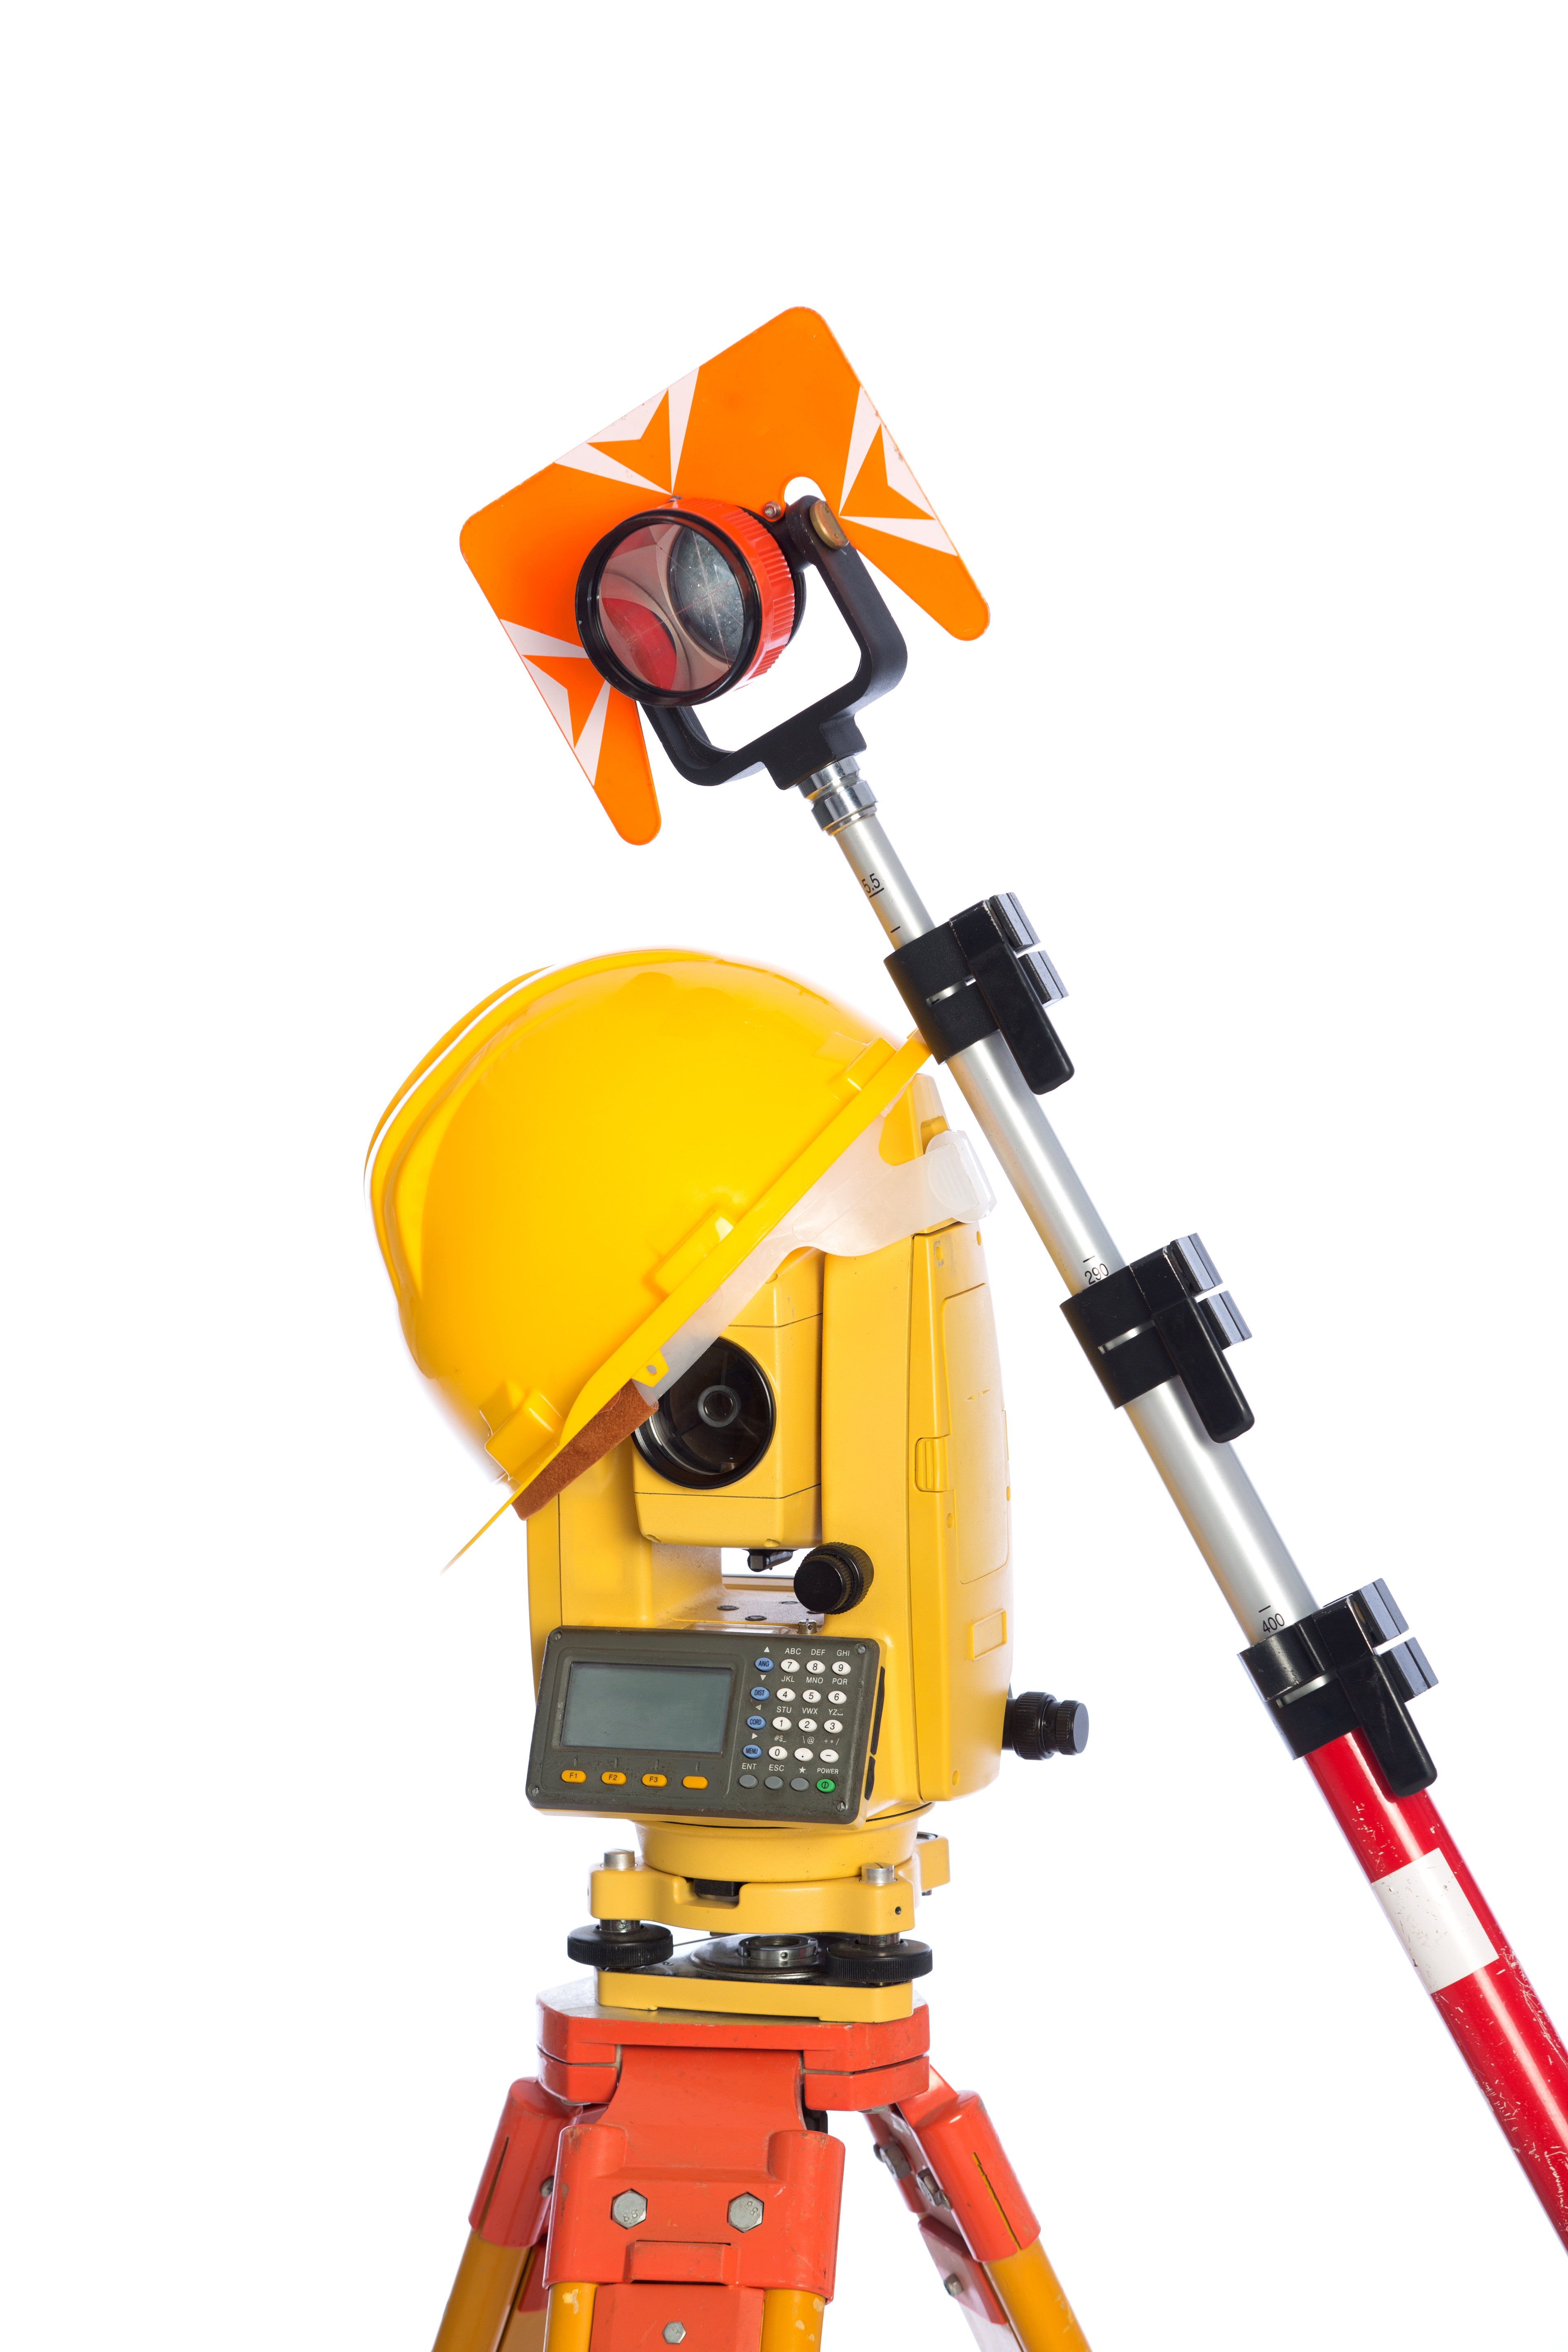 Surveyor equipment optical level